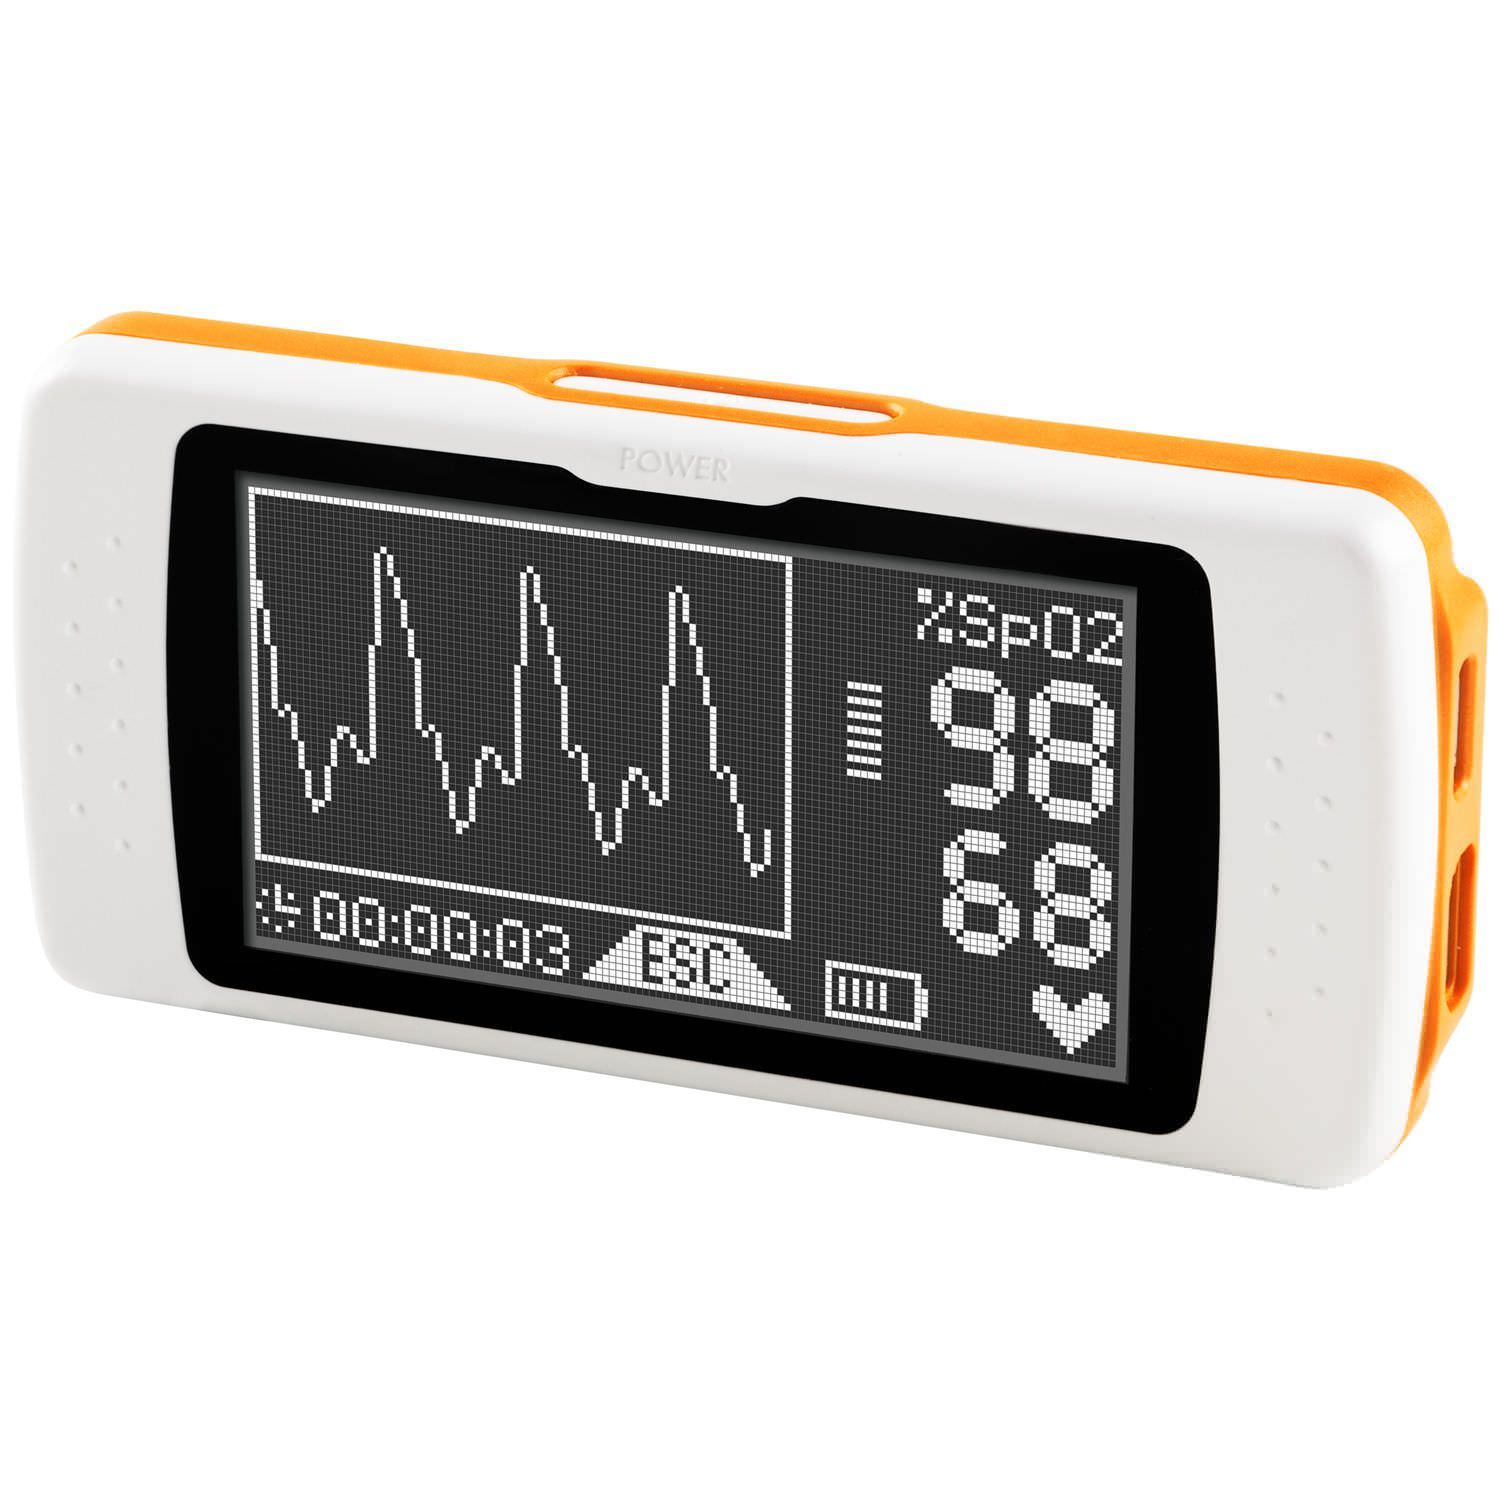 Pulse oximeter with separate sensor / handheld / wireless 0 - 99 %, 30 - 254 bpm | Spirodoc® Oxi MIR - Medical International Research